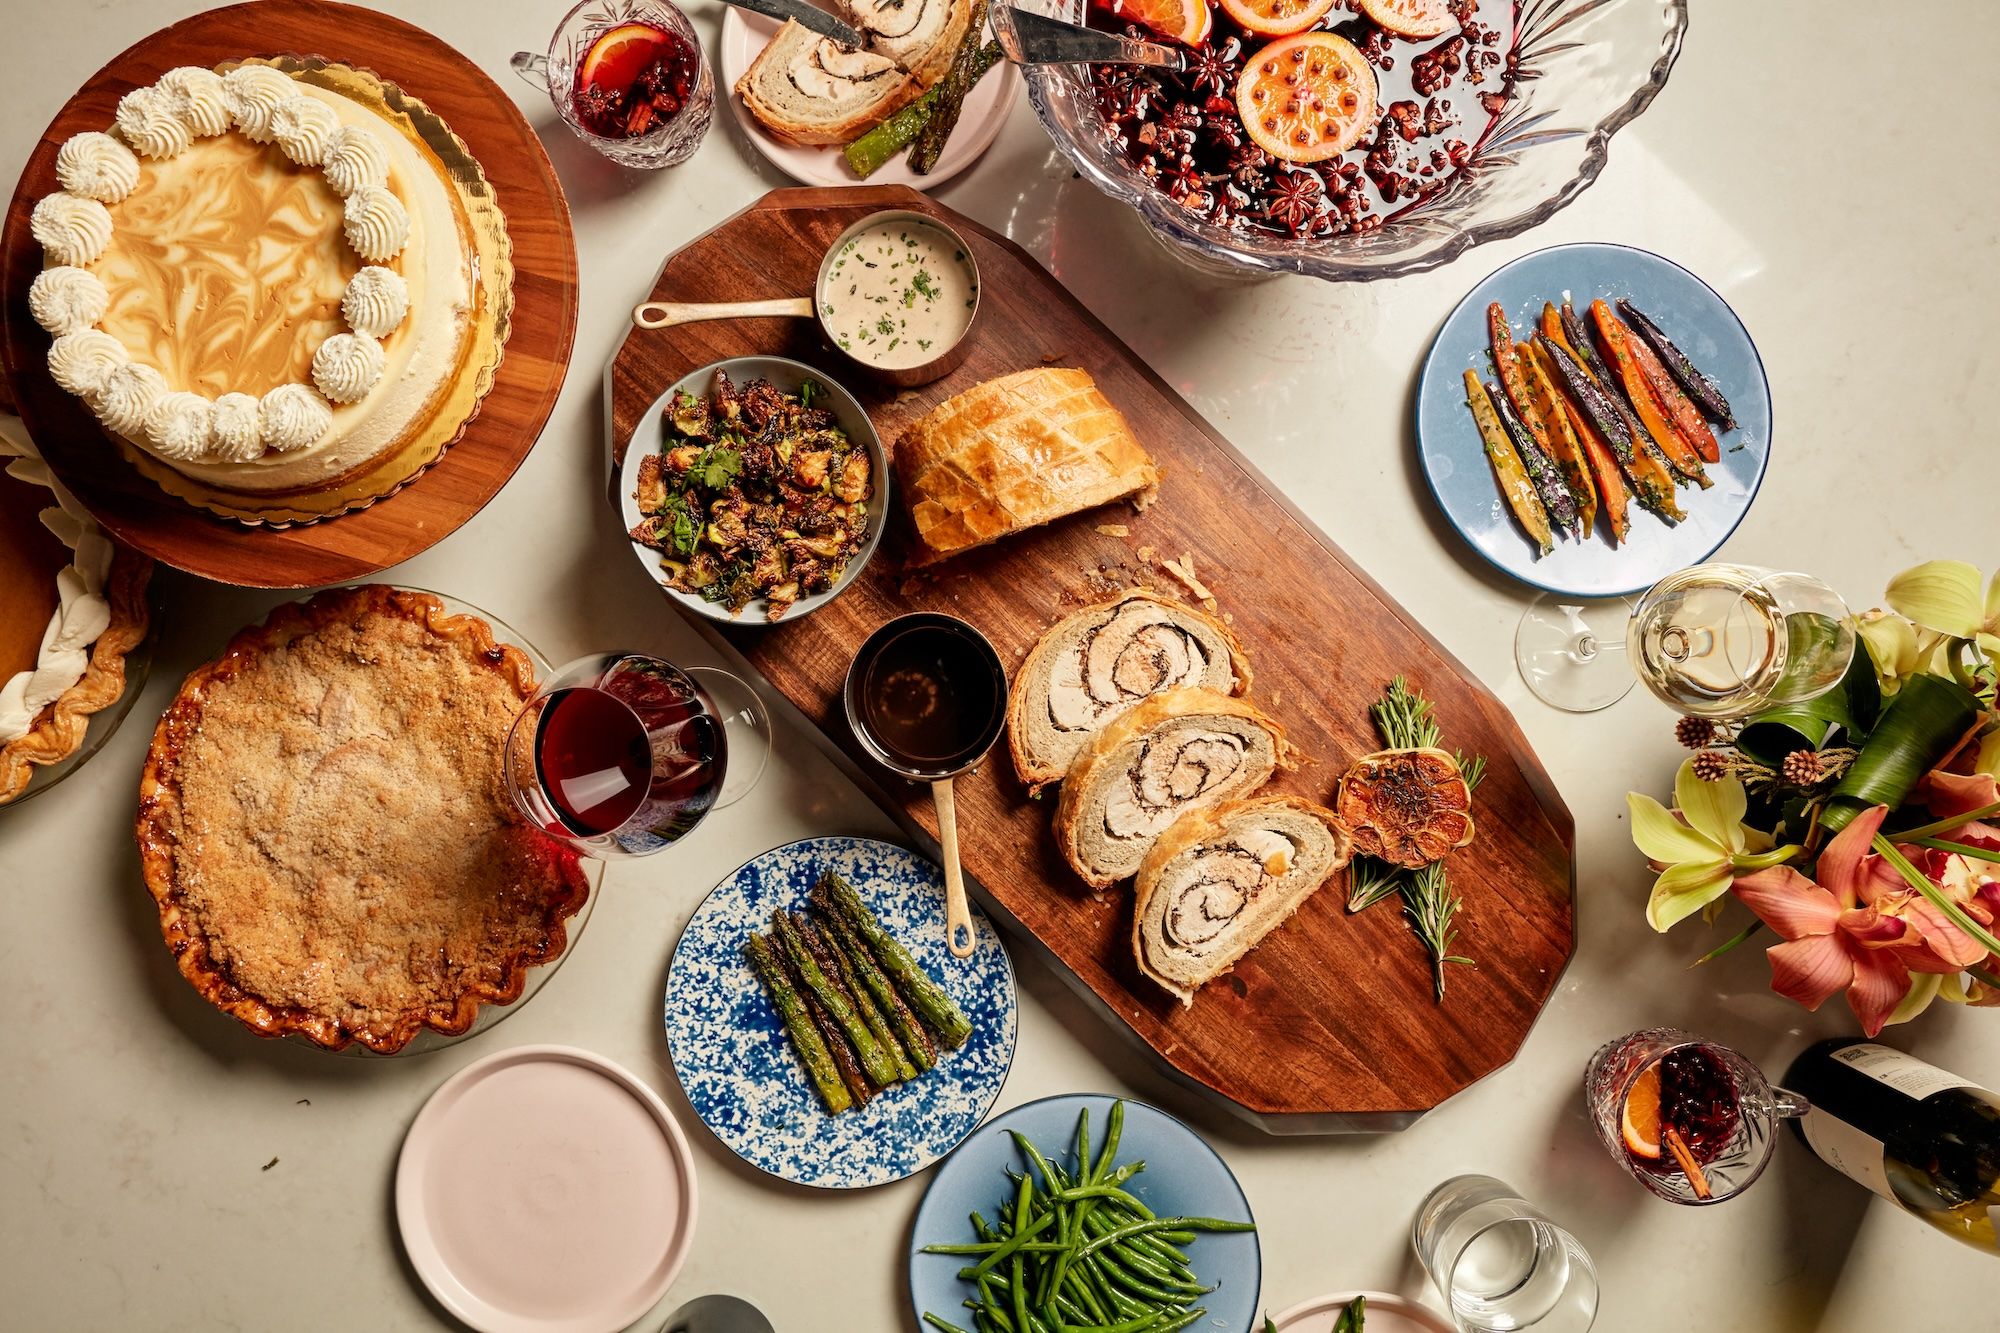 Cake, pie, glasses of wine around a cutting board with sliced turkey.